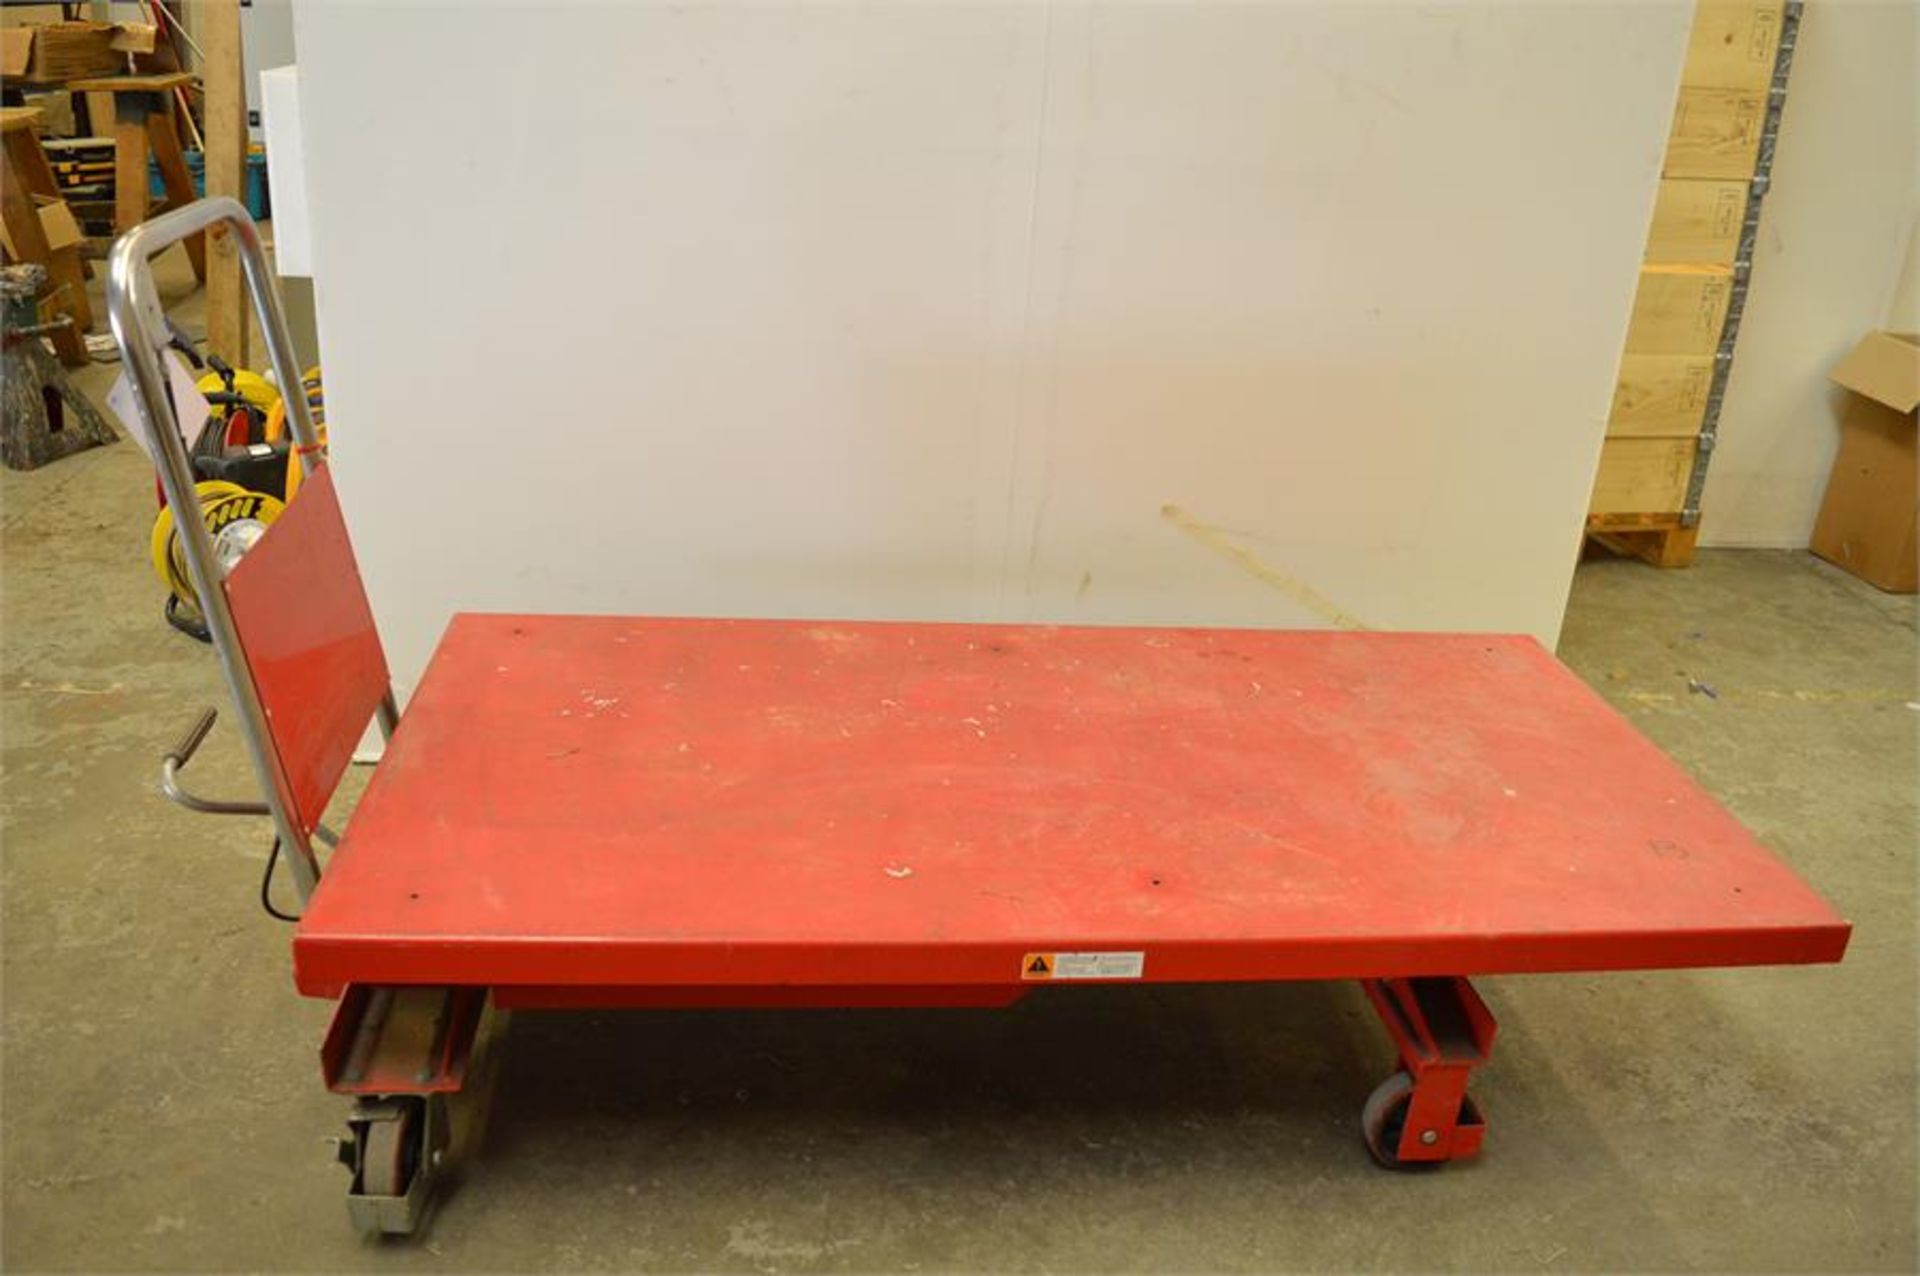 Lift Mate, TXL500L, 500kg mobile scissor lift table, Serial No. 11-07-034 (2011), lift height 310-